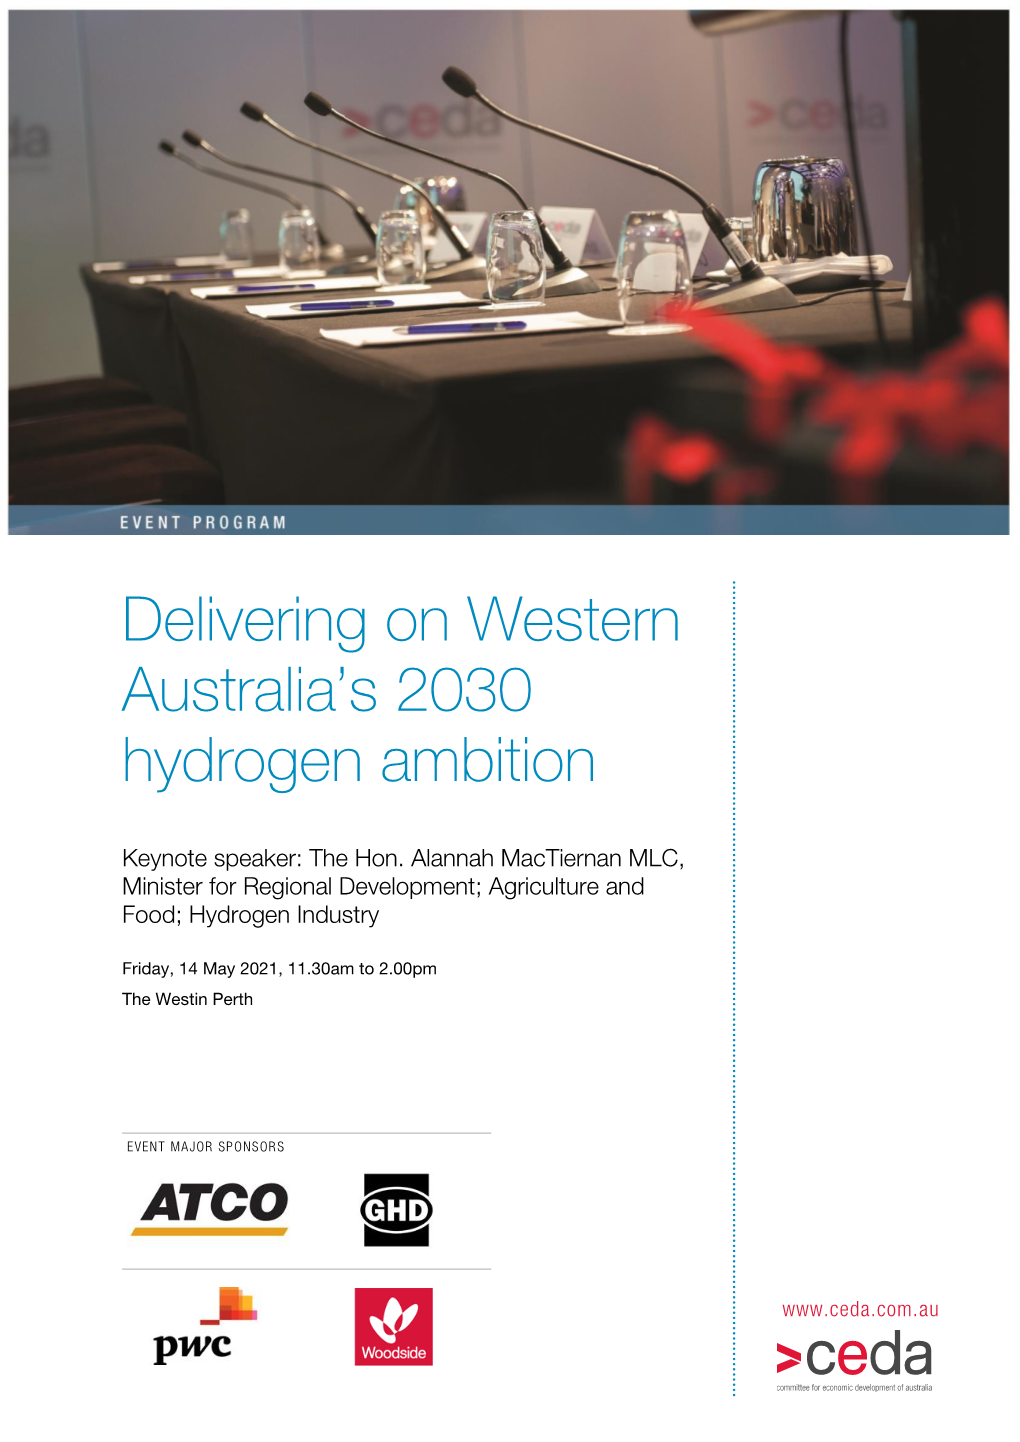 Delivering on Western Australia's 2030 Hydrogen Ambition